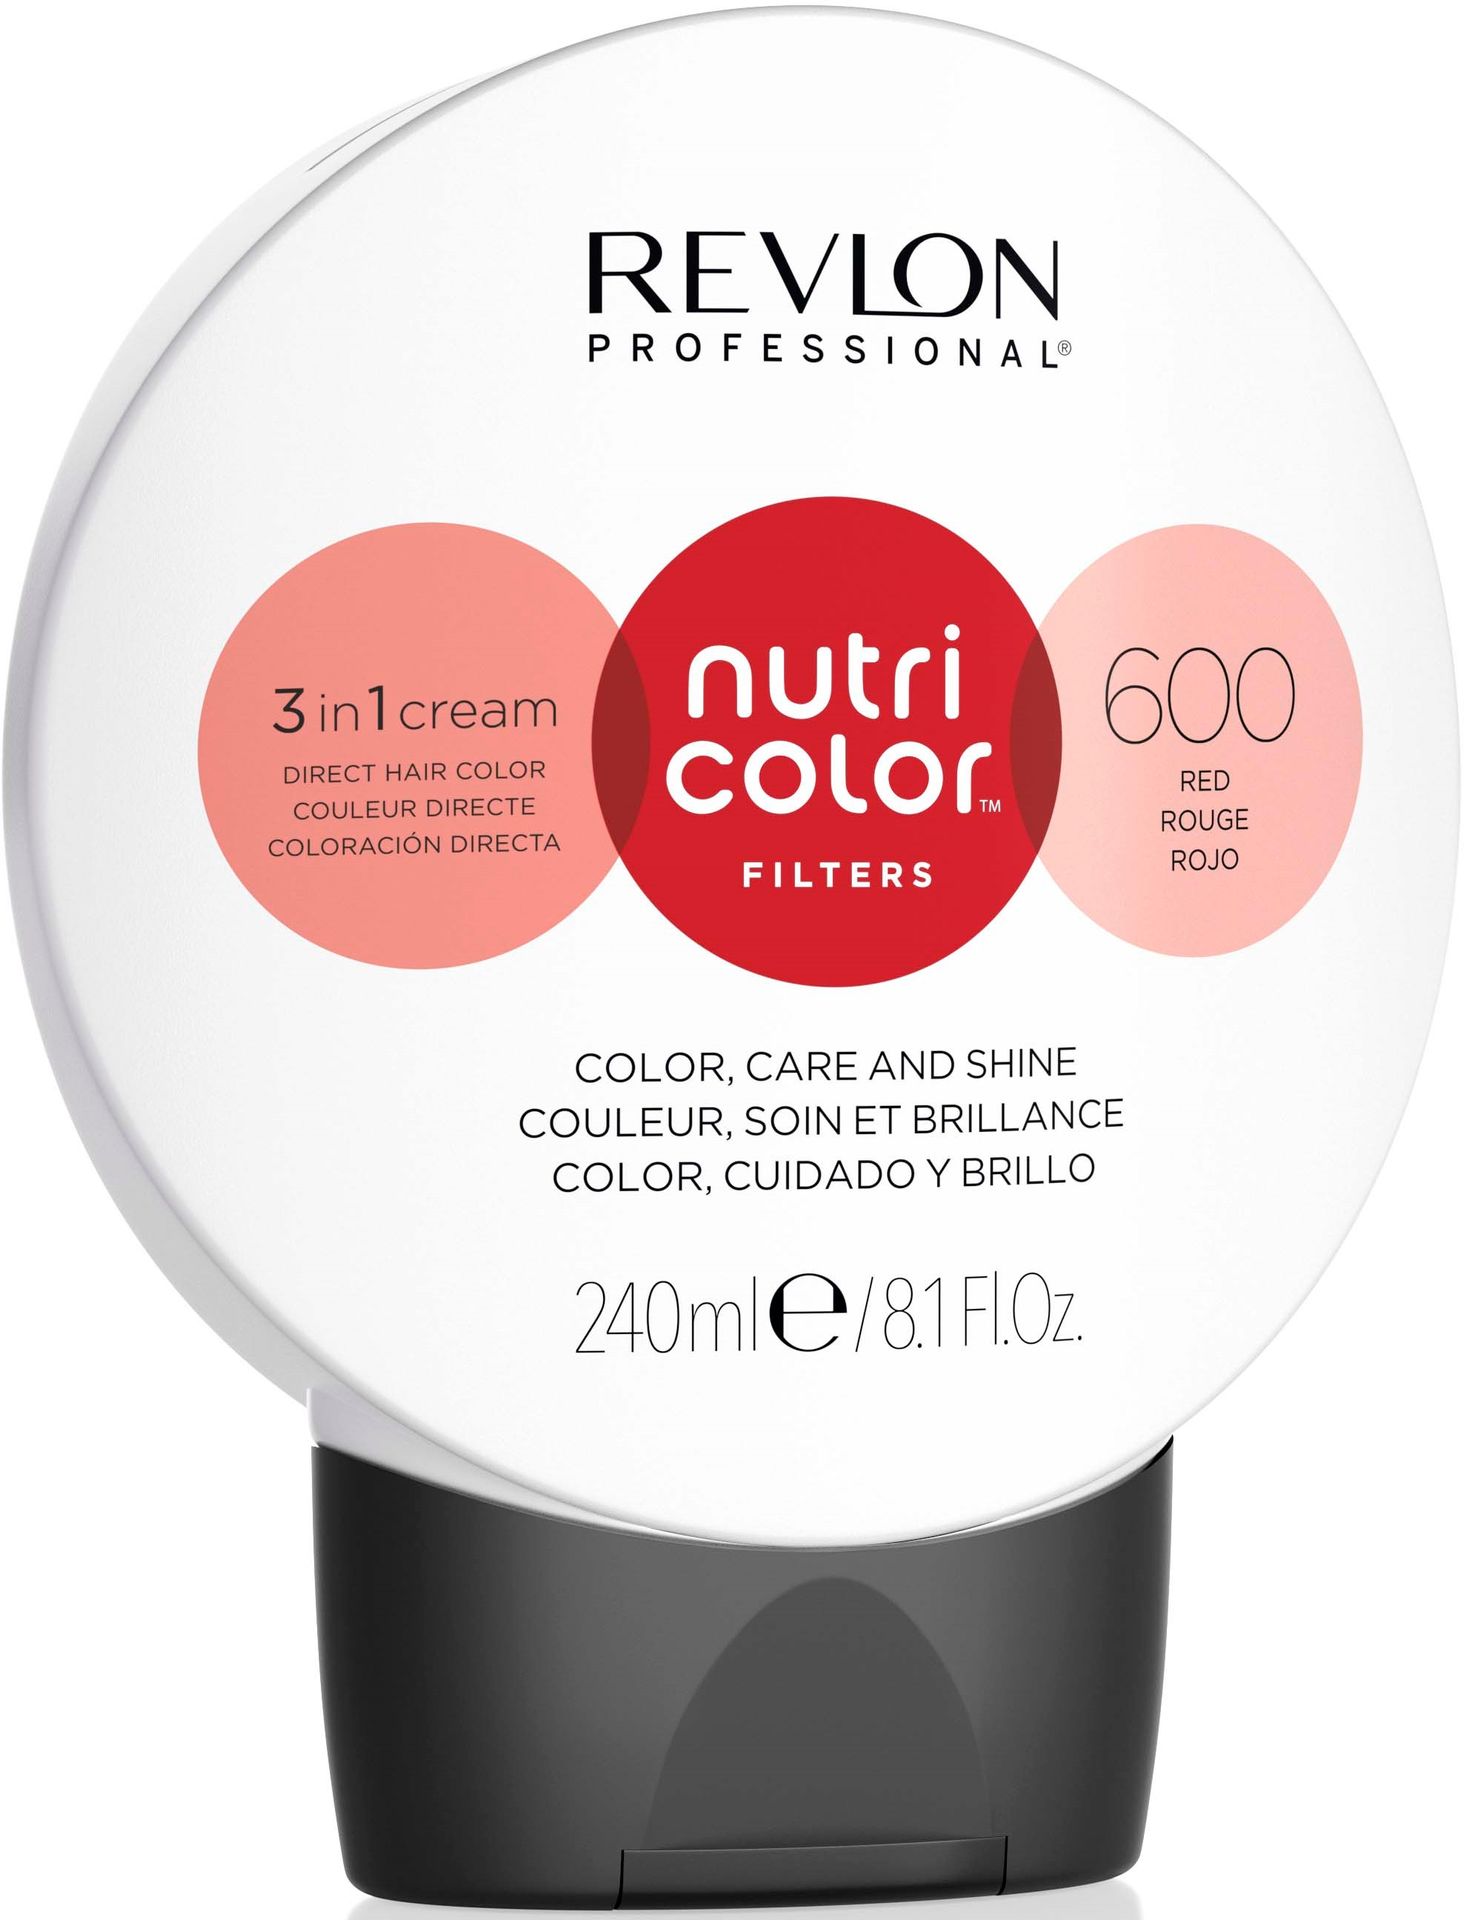 Revlon PROFESSIONAL Nutri Color Filters 600, kulka 240 ml